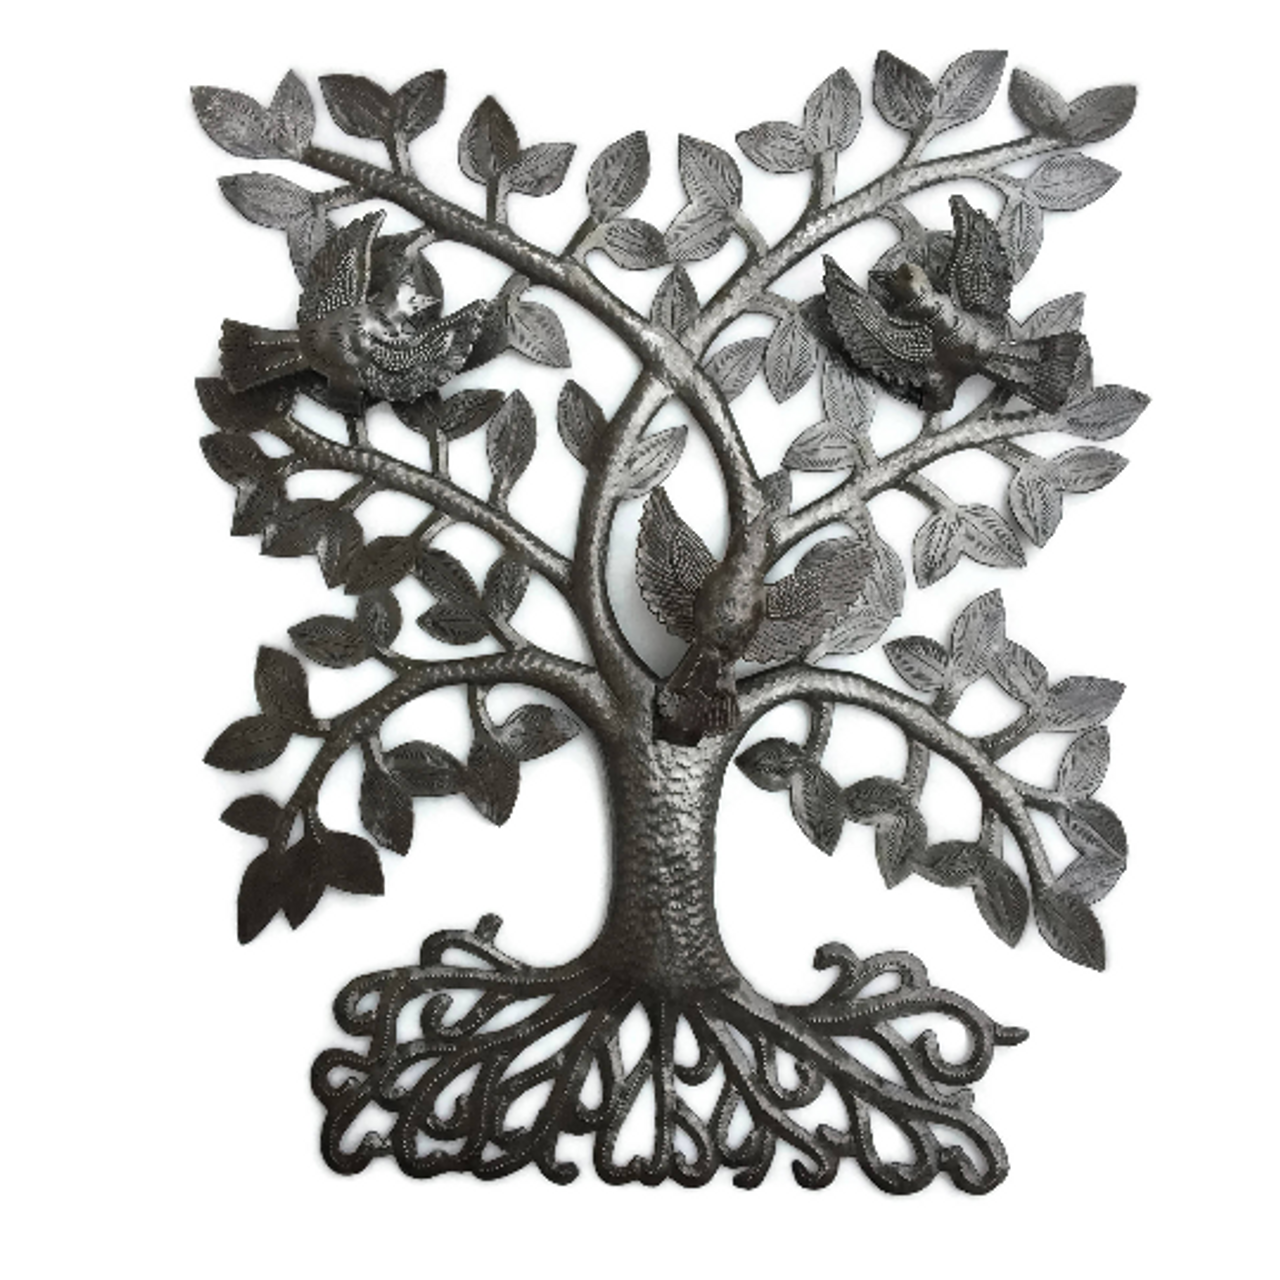 Tree of Life with 3D Birds, Joyful Garden Tree, Recycled Metal Wall Hanging Art, Haiti 14 x 17 Inches